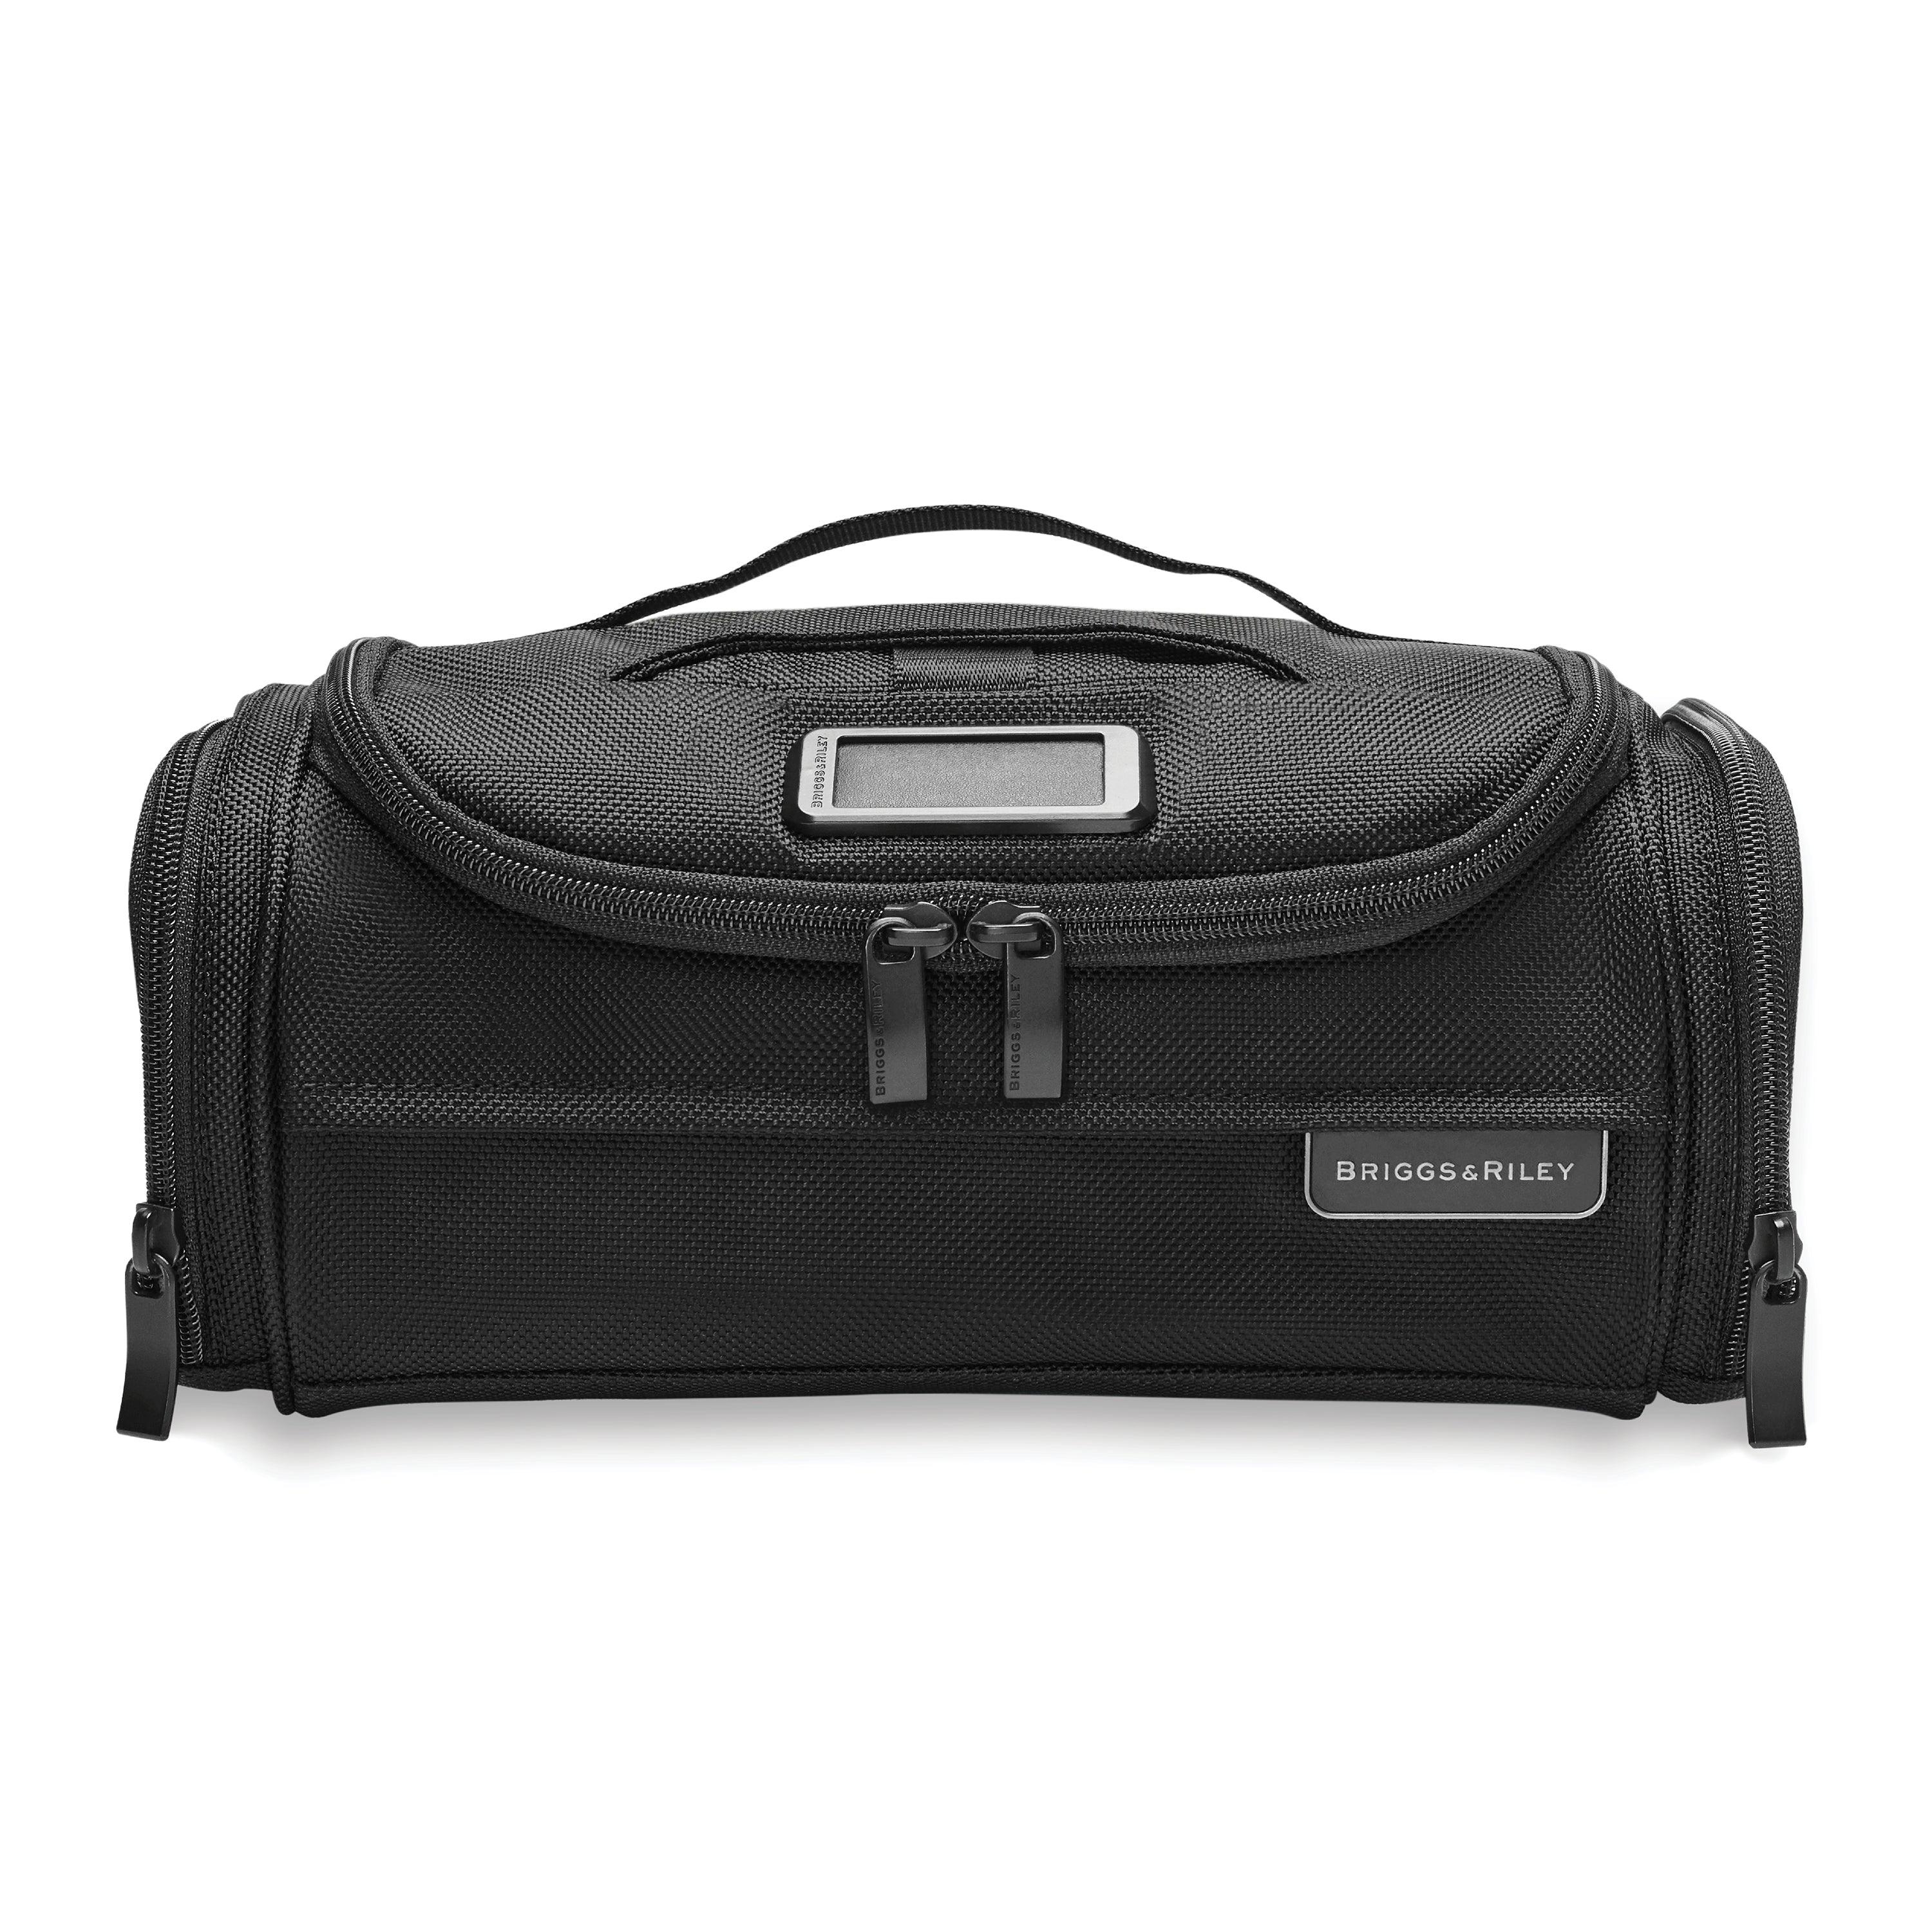 Baseline Executive Essentials Kit - Voyage Luggage